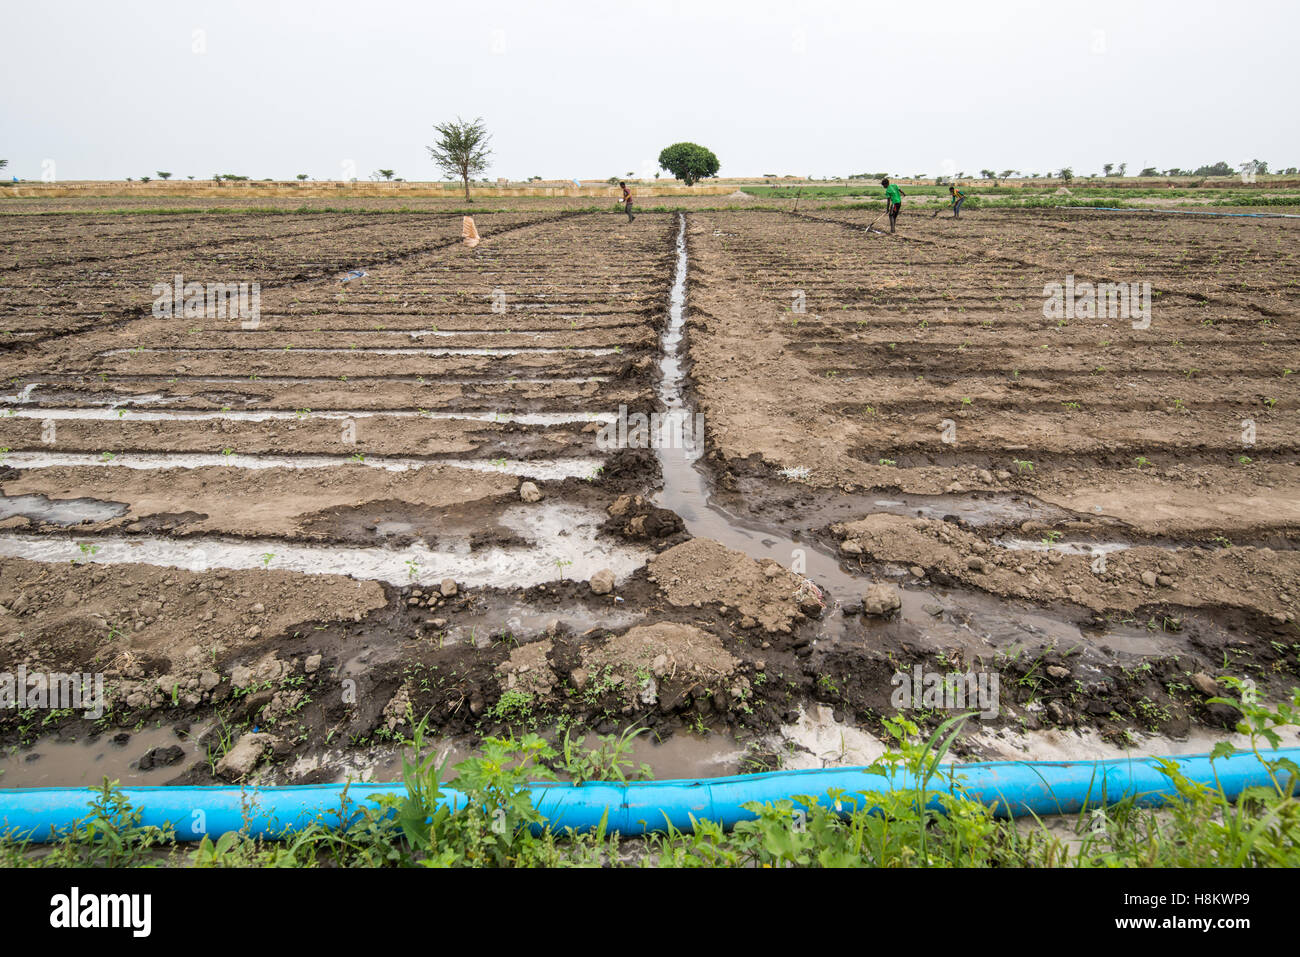 Meki Batu, Ethiopia - Irrigation system for the fields at the Fruit and Vegetable Growers Cooperative in Meki Batu. Stock Photo